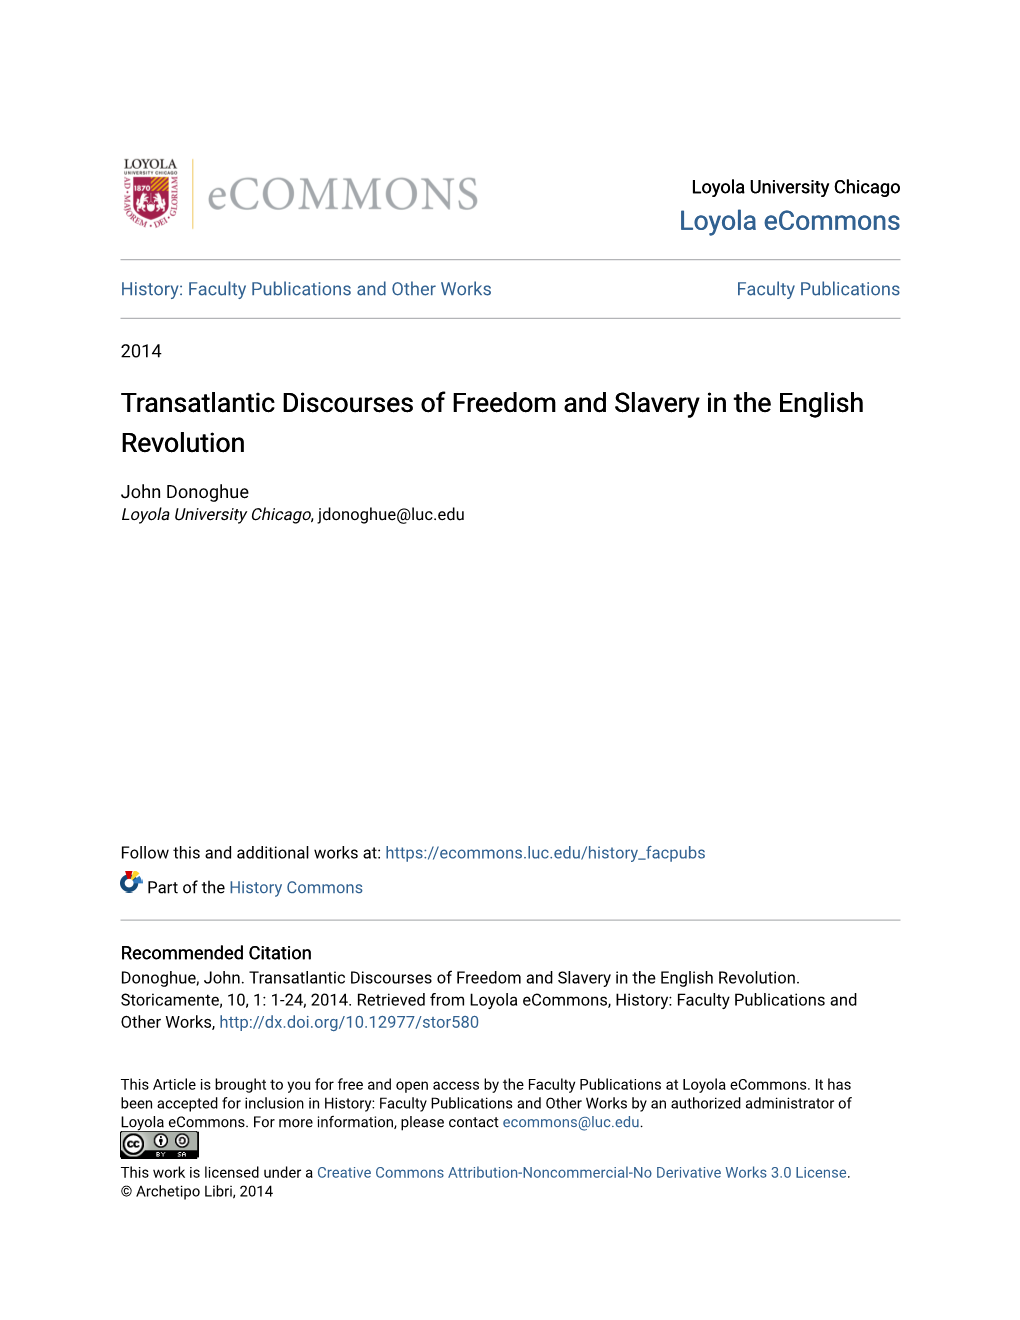 Transatlantic Discourses of Freedom and Slavery in the English Revolution